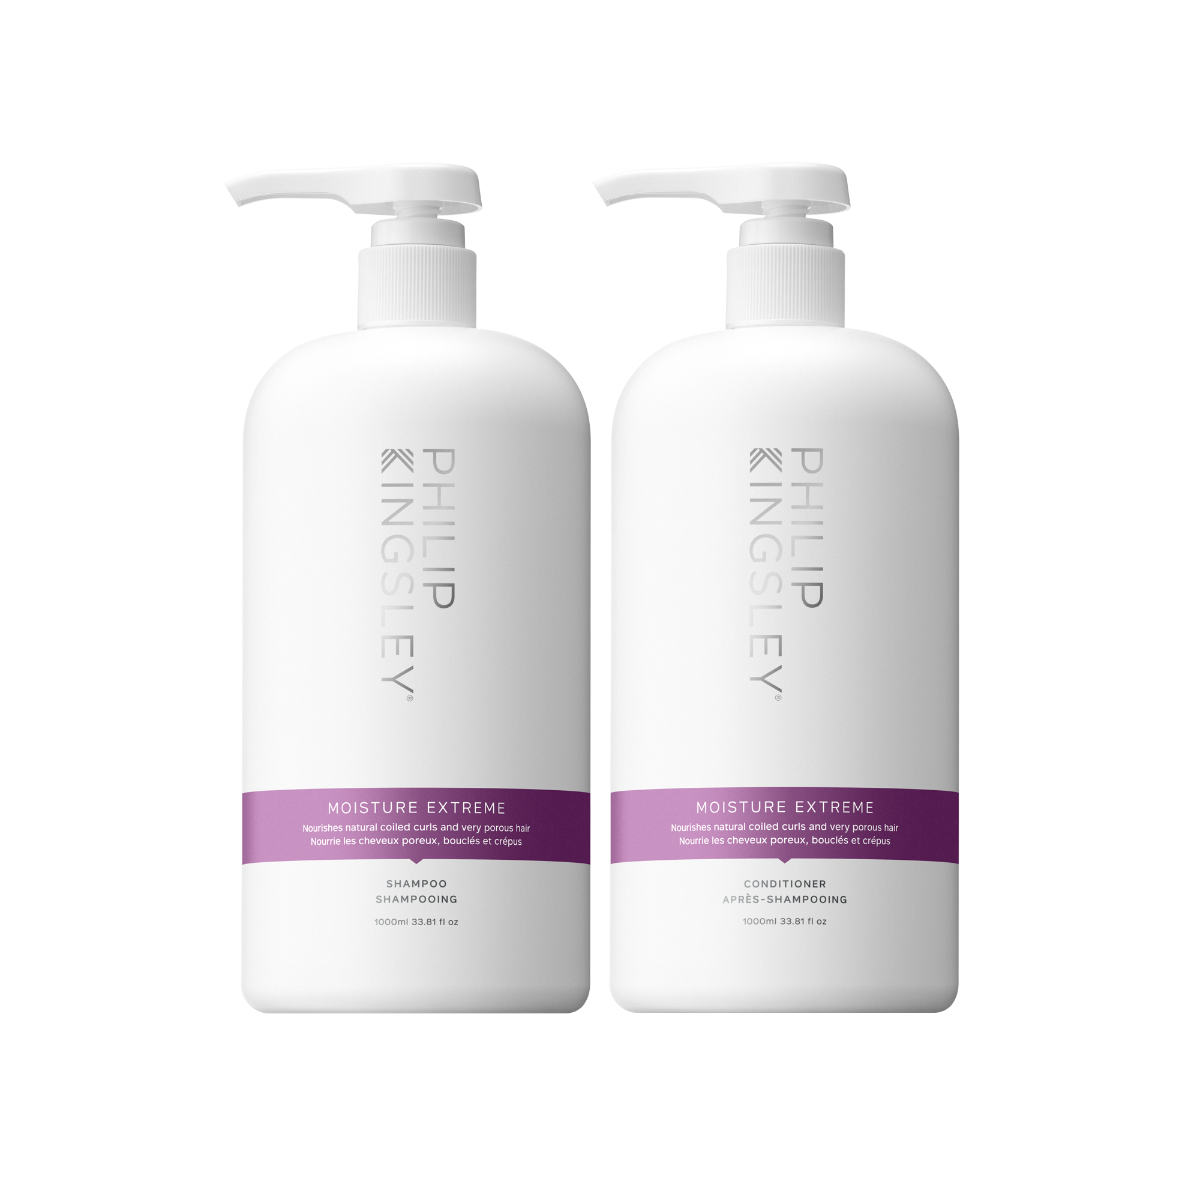 Moisture Extreme Enriching Shampoo Conditioner Supersize Duo US